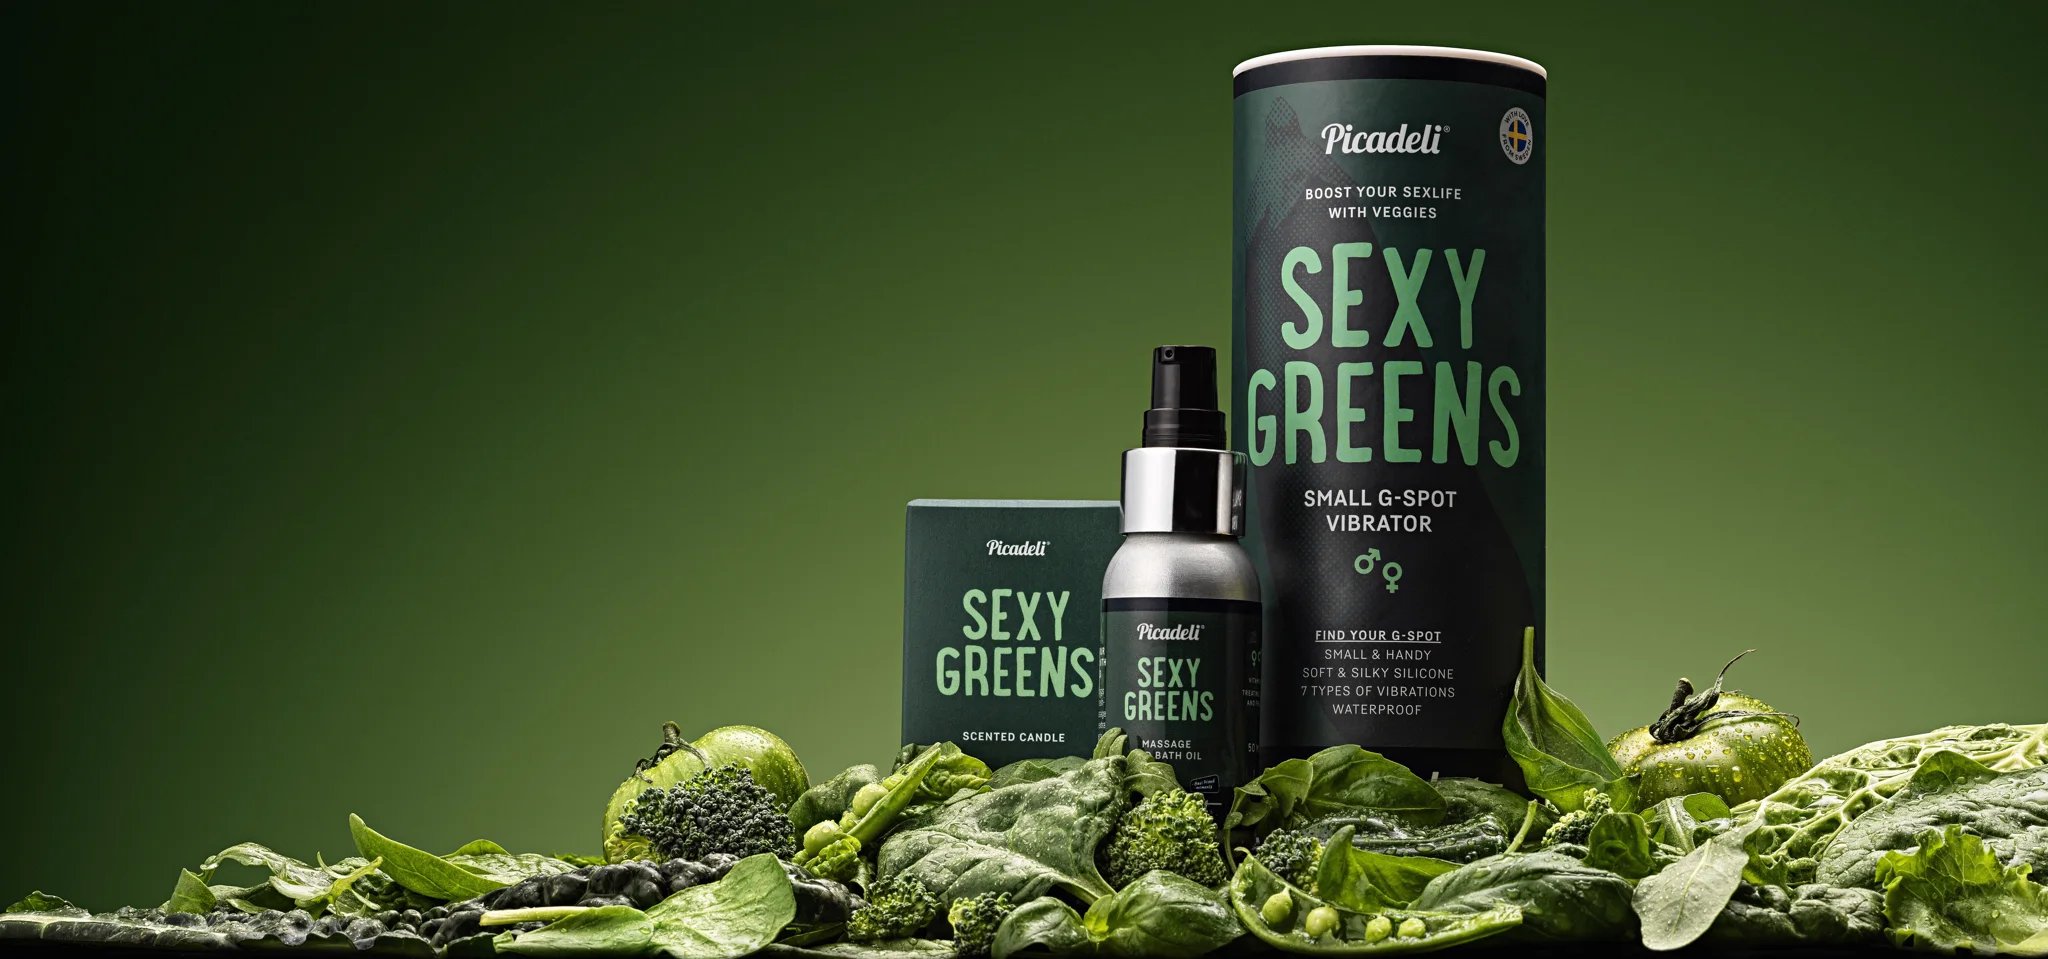 Sexy Greens / Picadeli